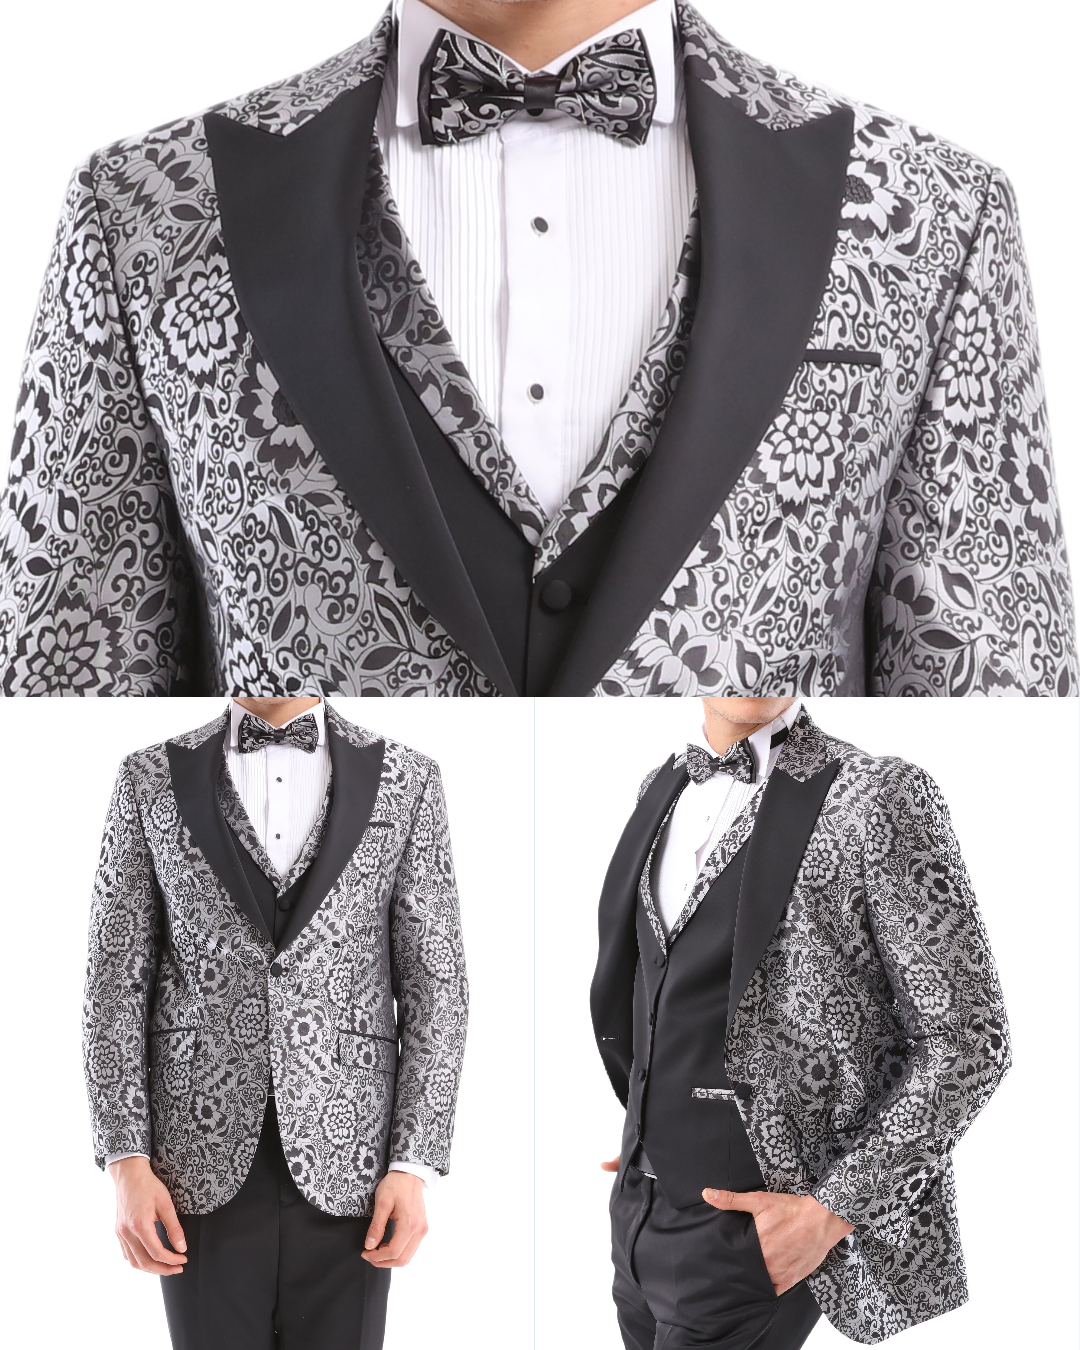 ELEGANCE GREY - Grey Jacquard Four Piece Dinner & Wedding Suit